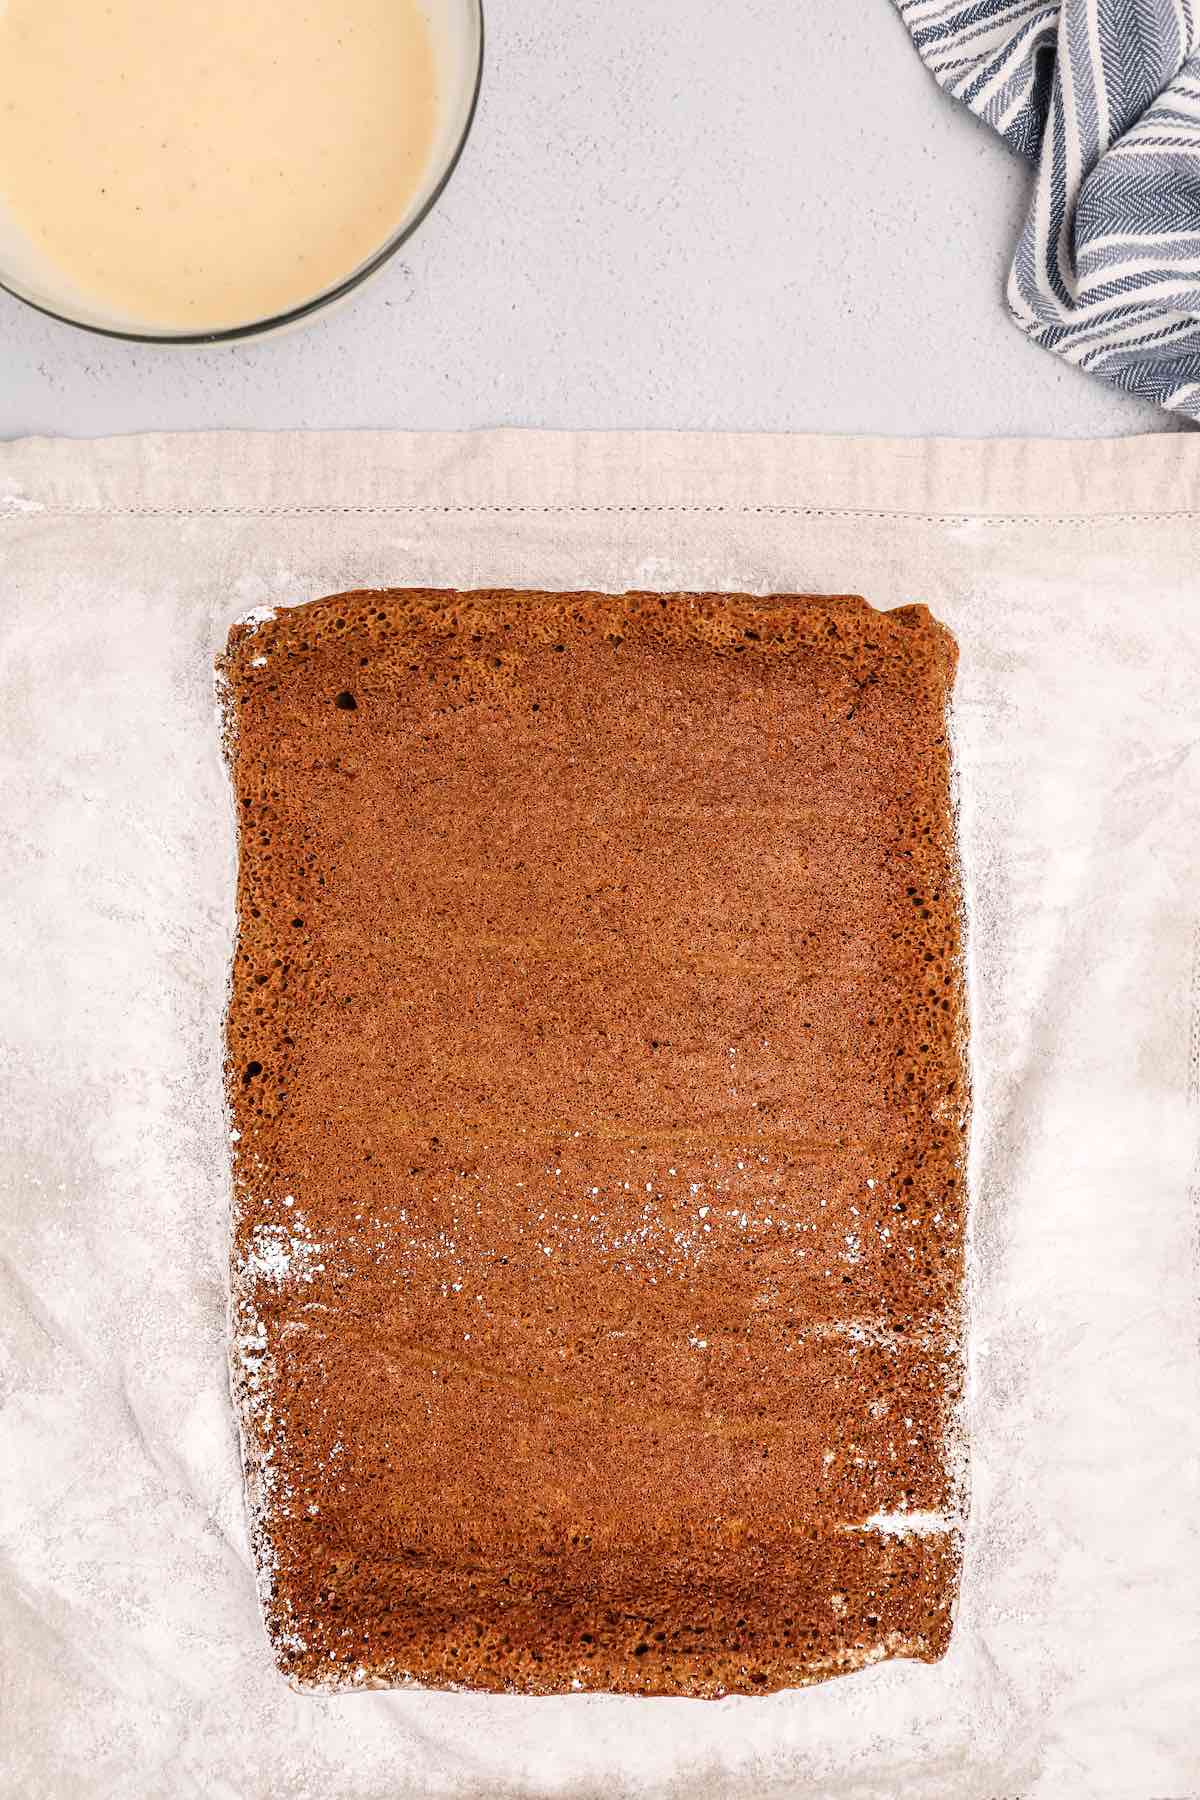 Gingerbread cake on a tea towel.